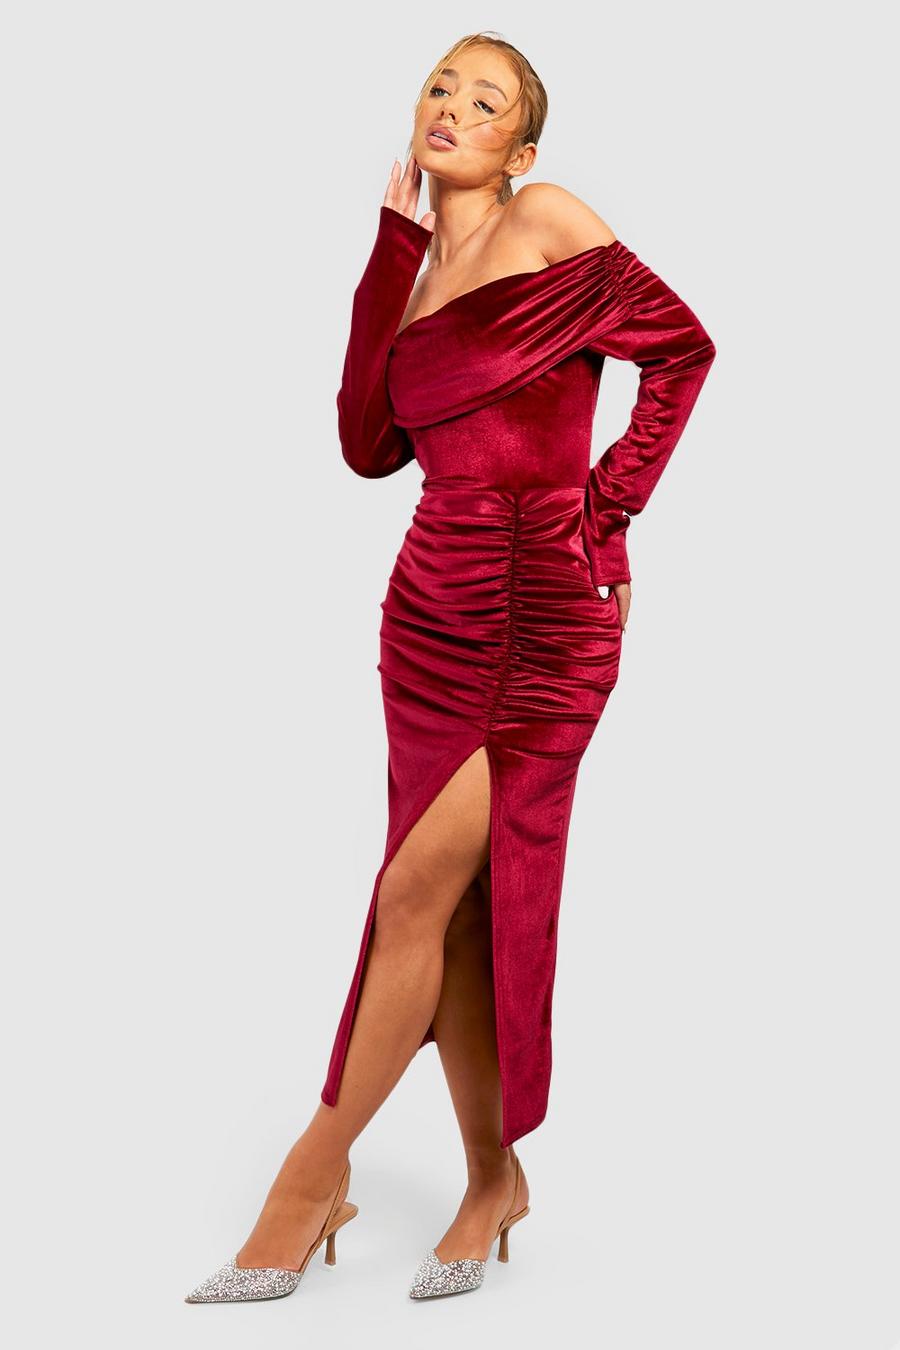 Velour Corset Mini Dress by Bardot for $35